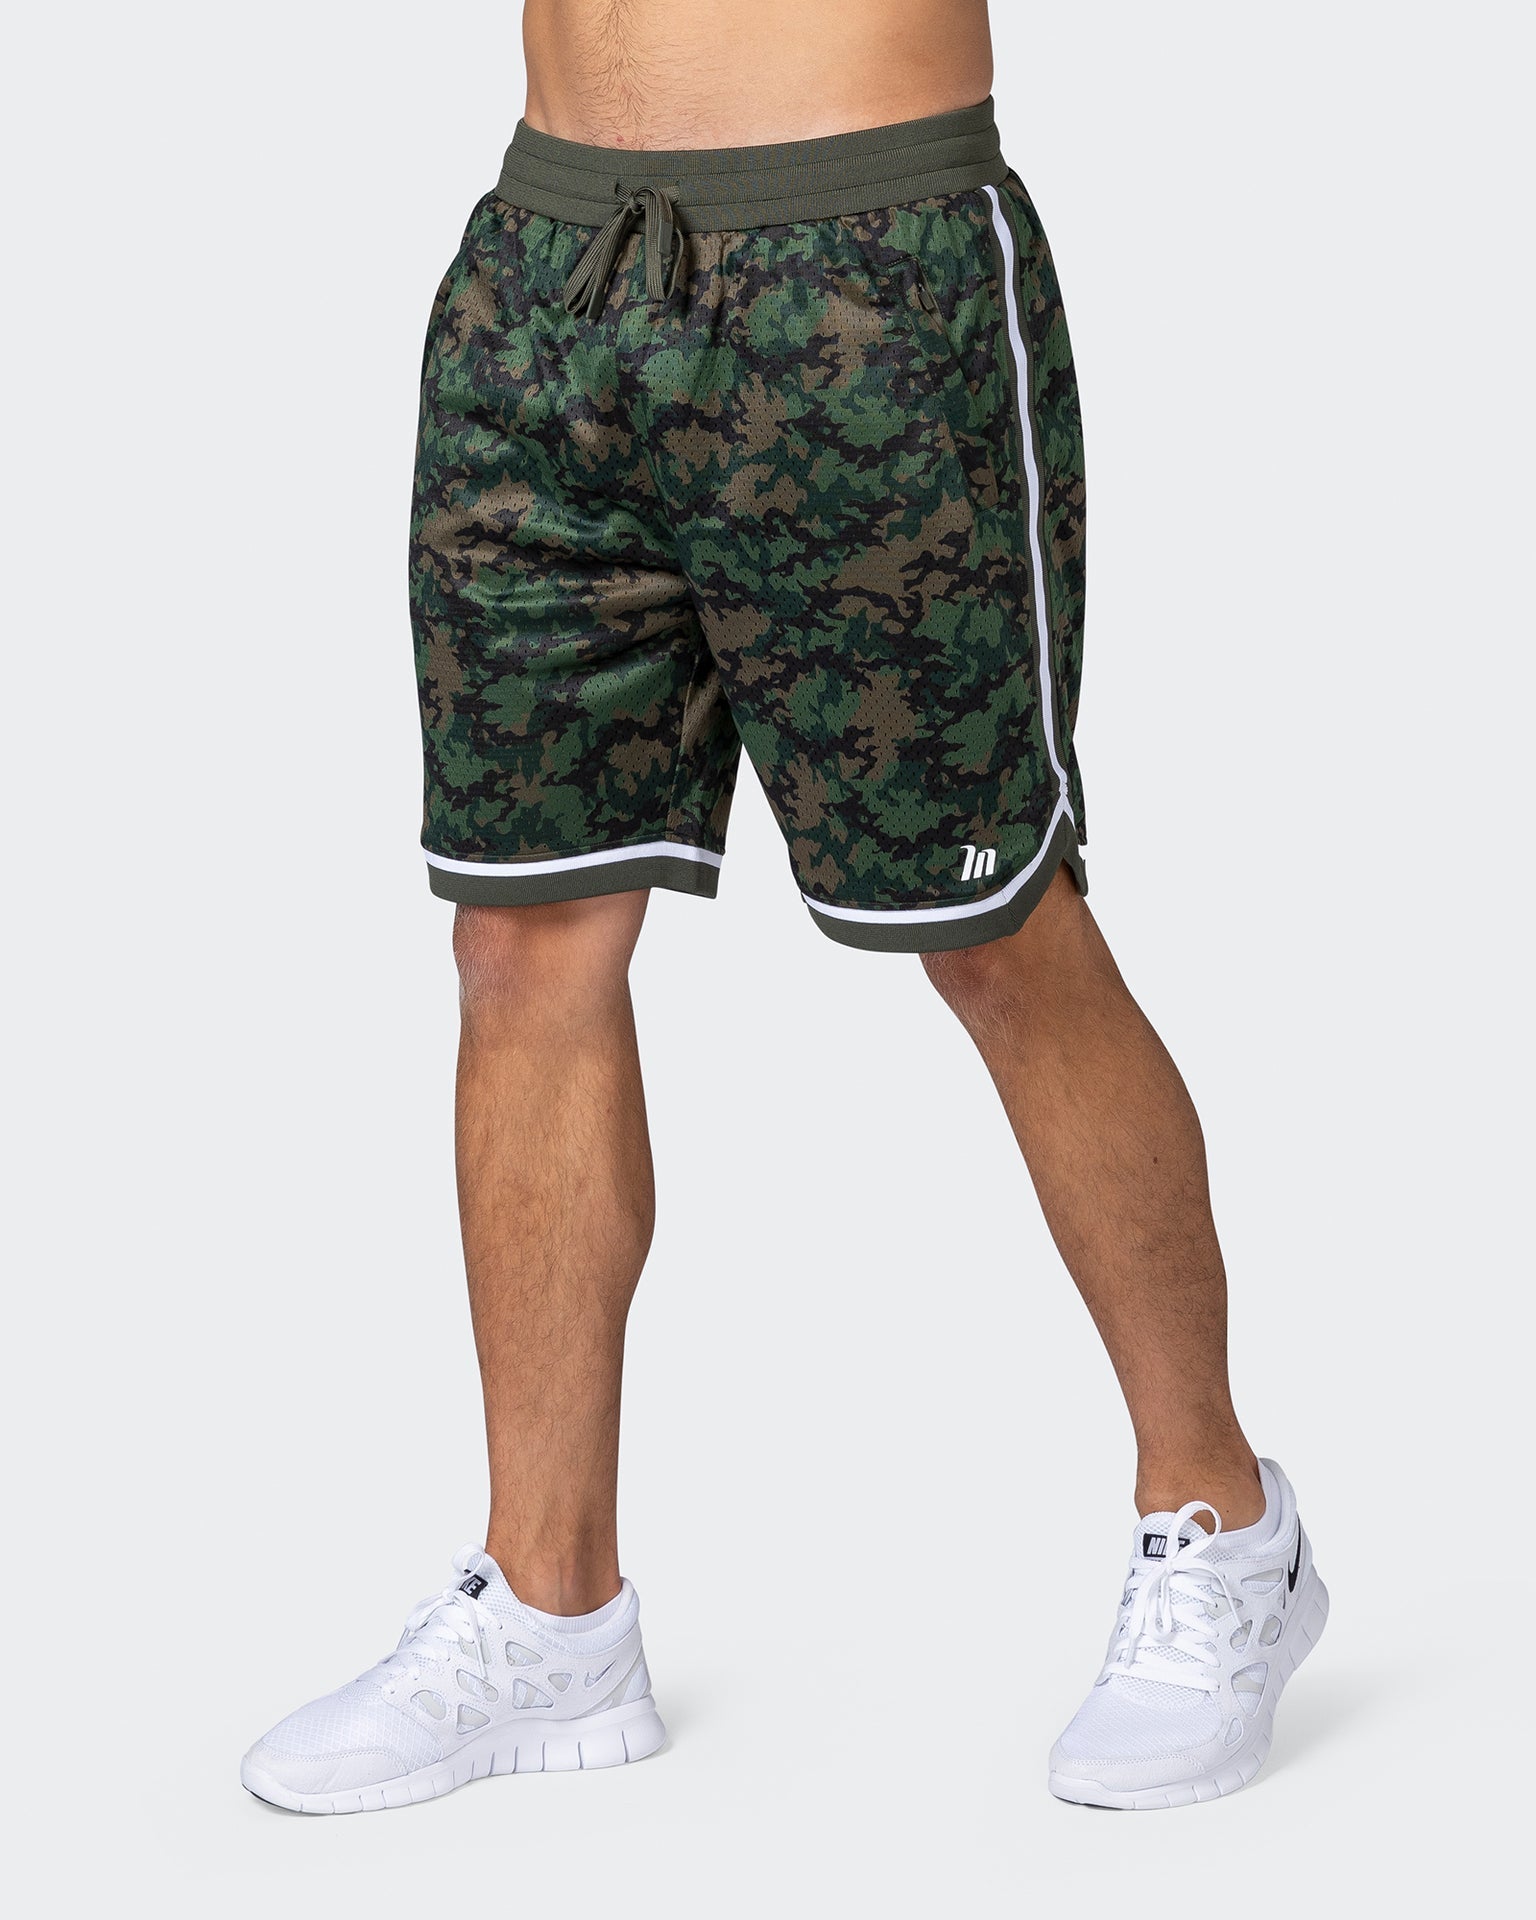 musclenation Shorts Mens 8" Basketball Shorts - Dark Khaki Camo Print